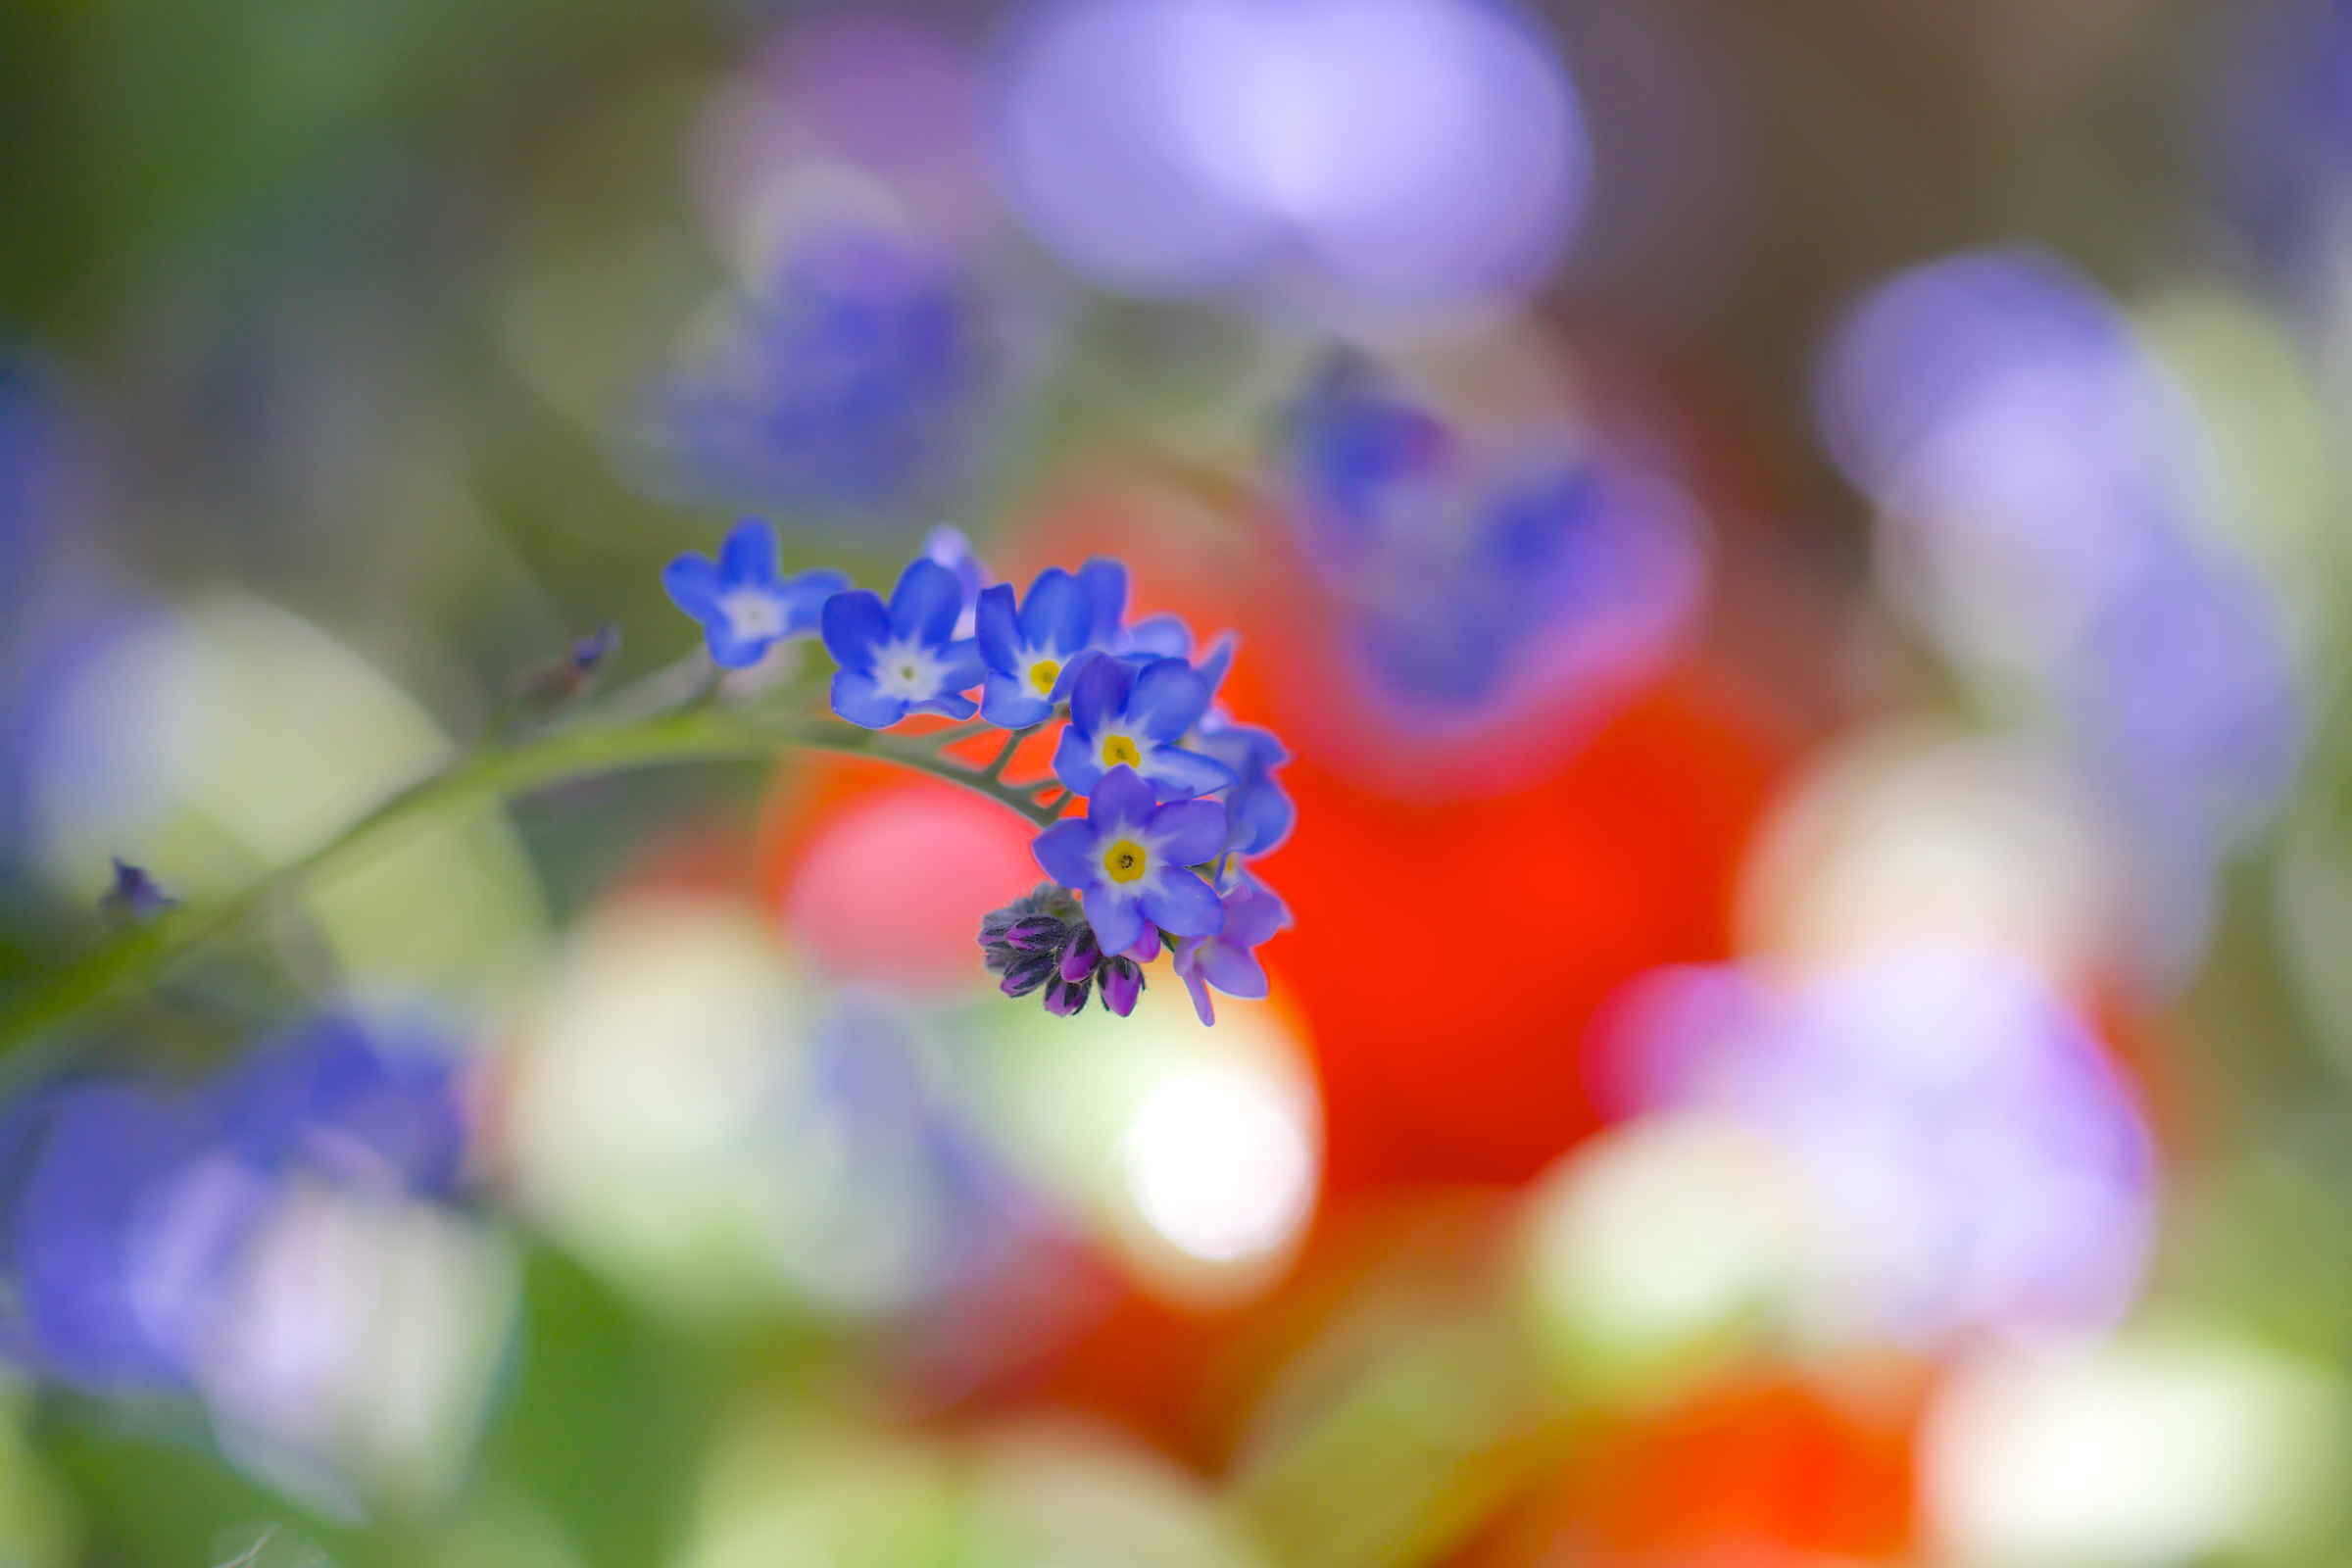 Descarga gratis la imagen Naturaleza, Flores, Flor, Bokeh, Nomeolvides, Tierra/naturaleza, Flor Azul en el escritorio de tu PC